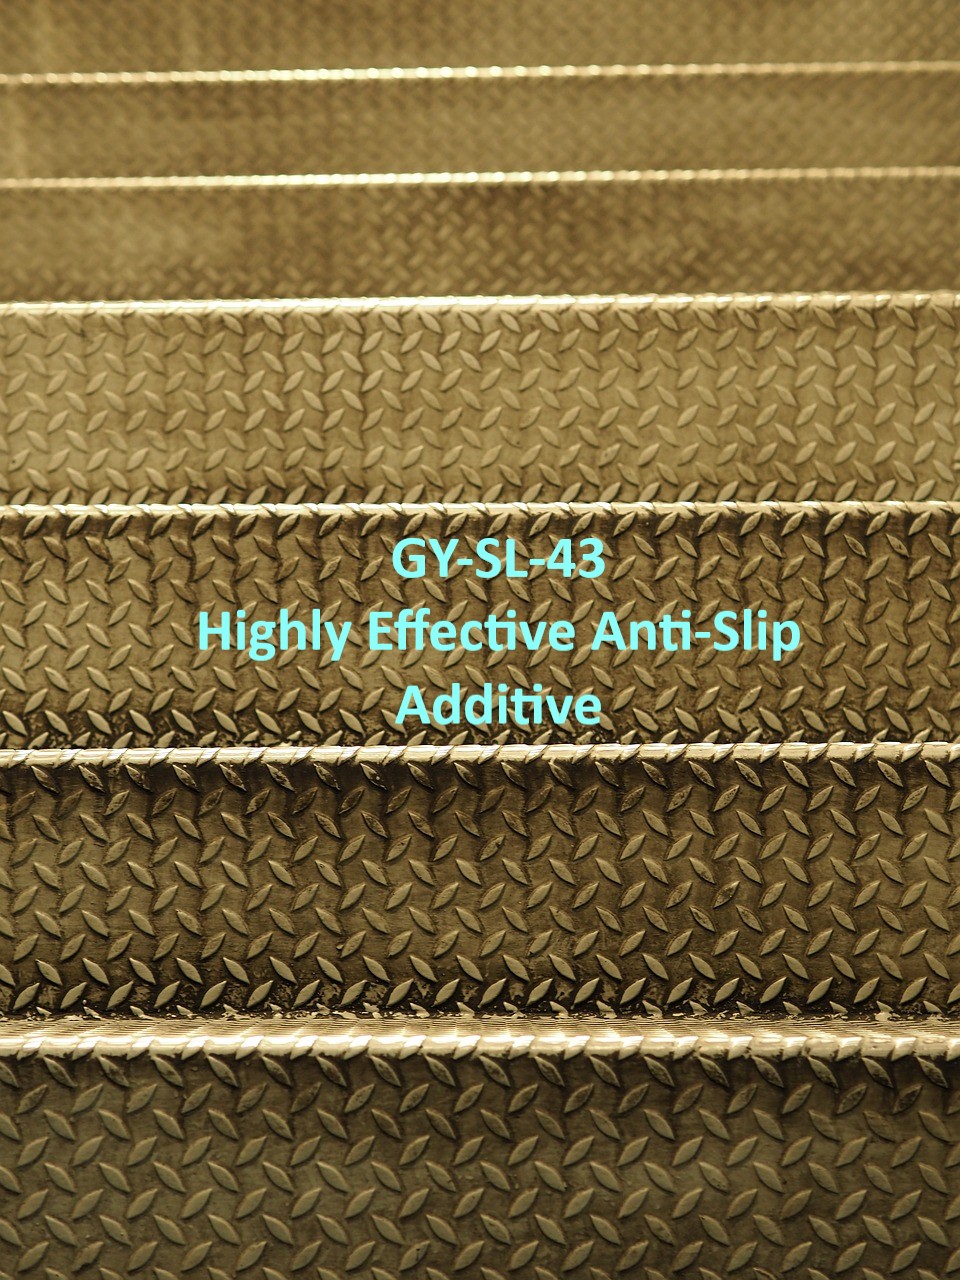 GY-SL-43 Highly Effective Anti-Slip Additive